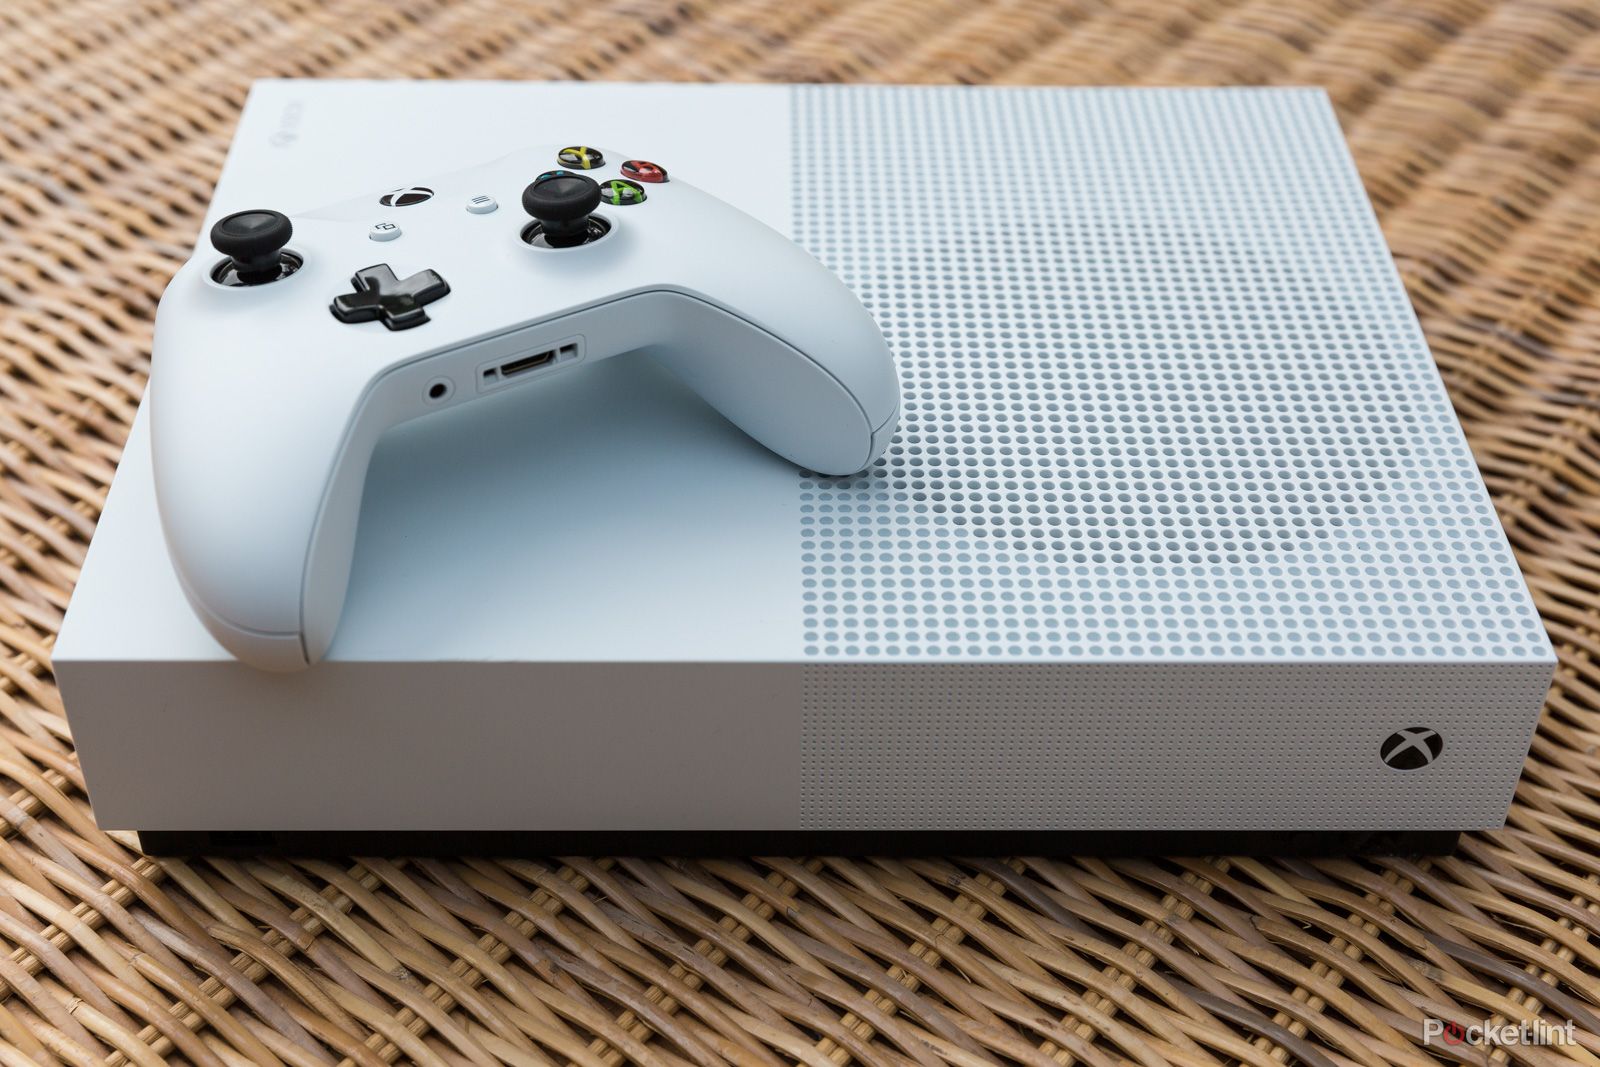 ik heb nodig Graf Geniet Xbox One S All-Digital Edition review - Pocket-lint